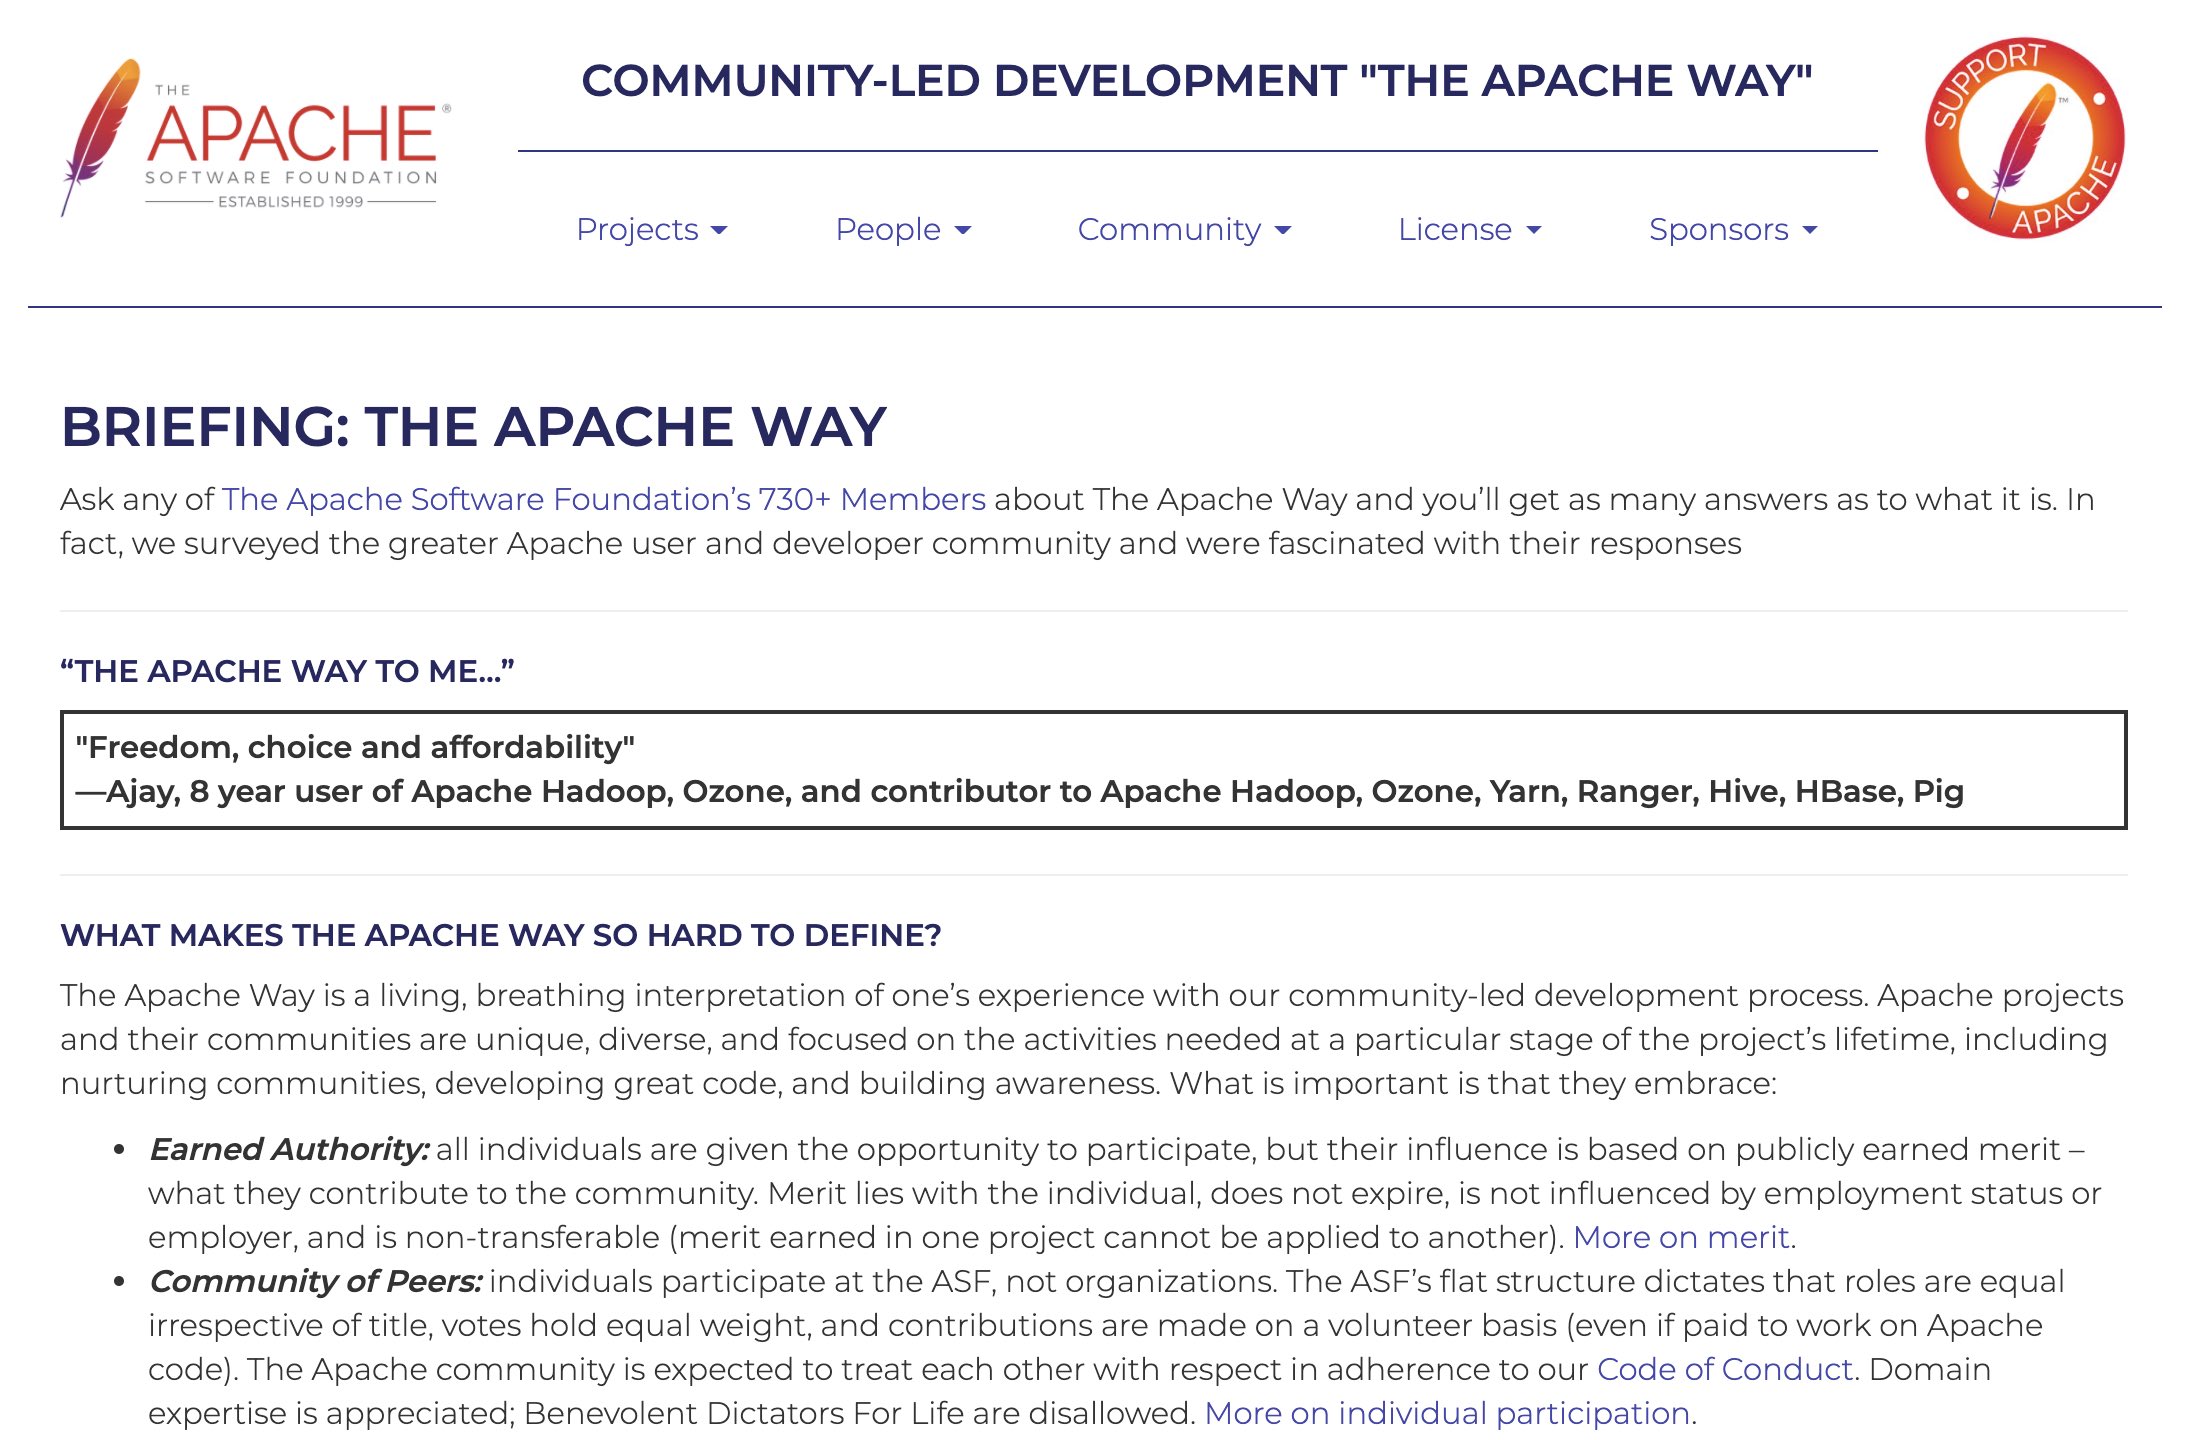 The Apache Way